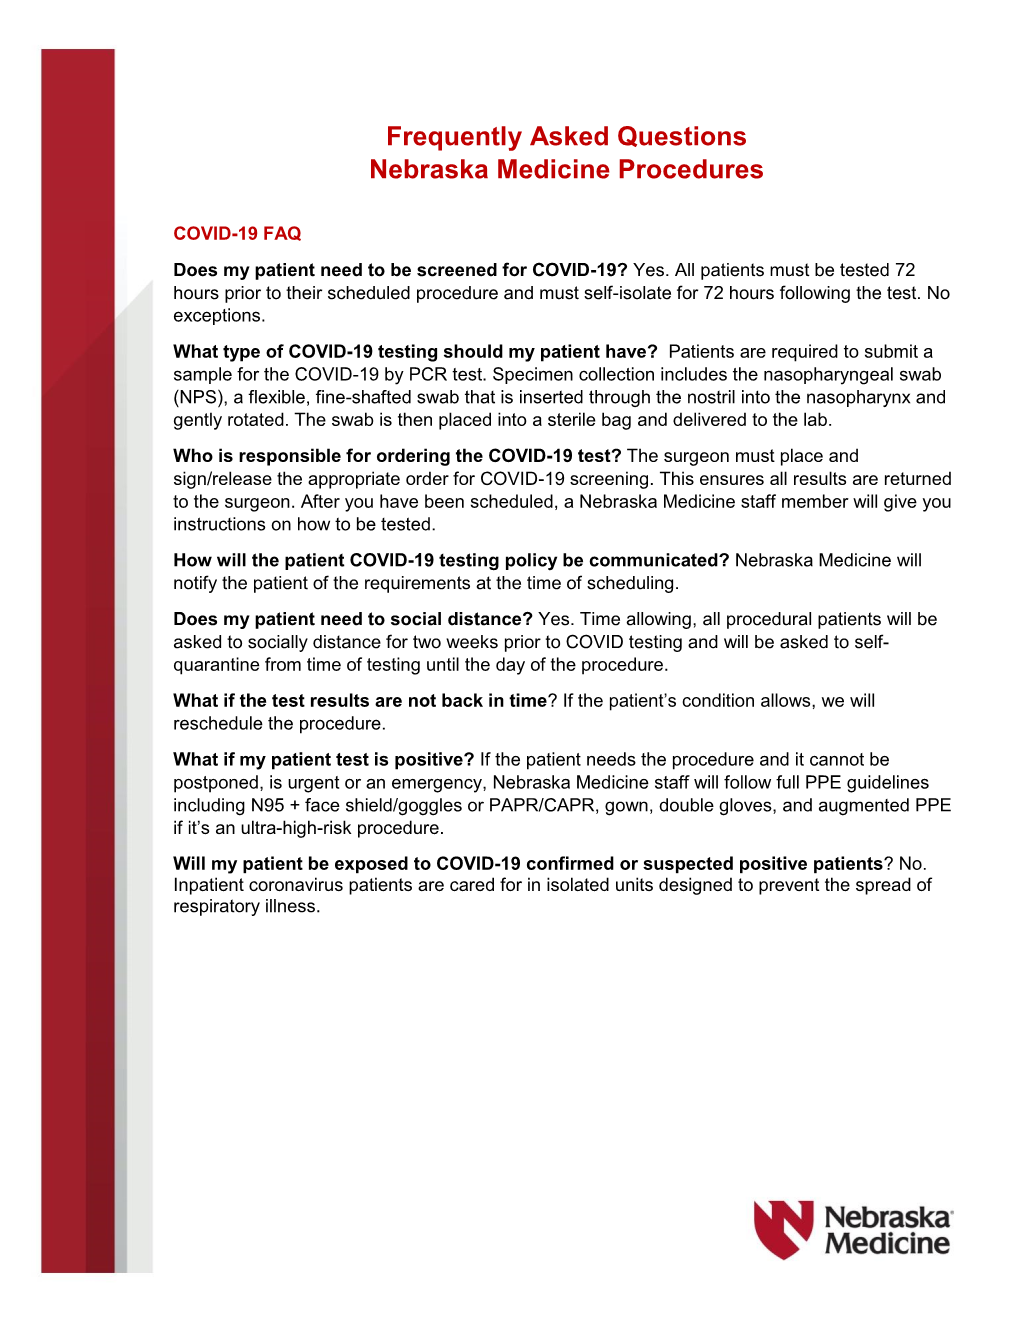 Frequently Asked Questions Nebraska Medicine Procedures